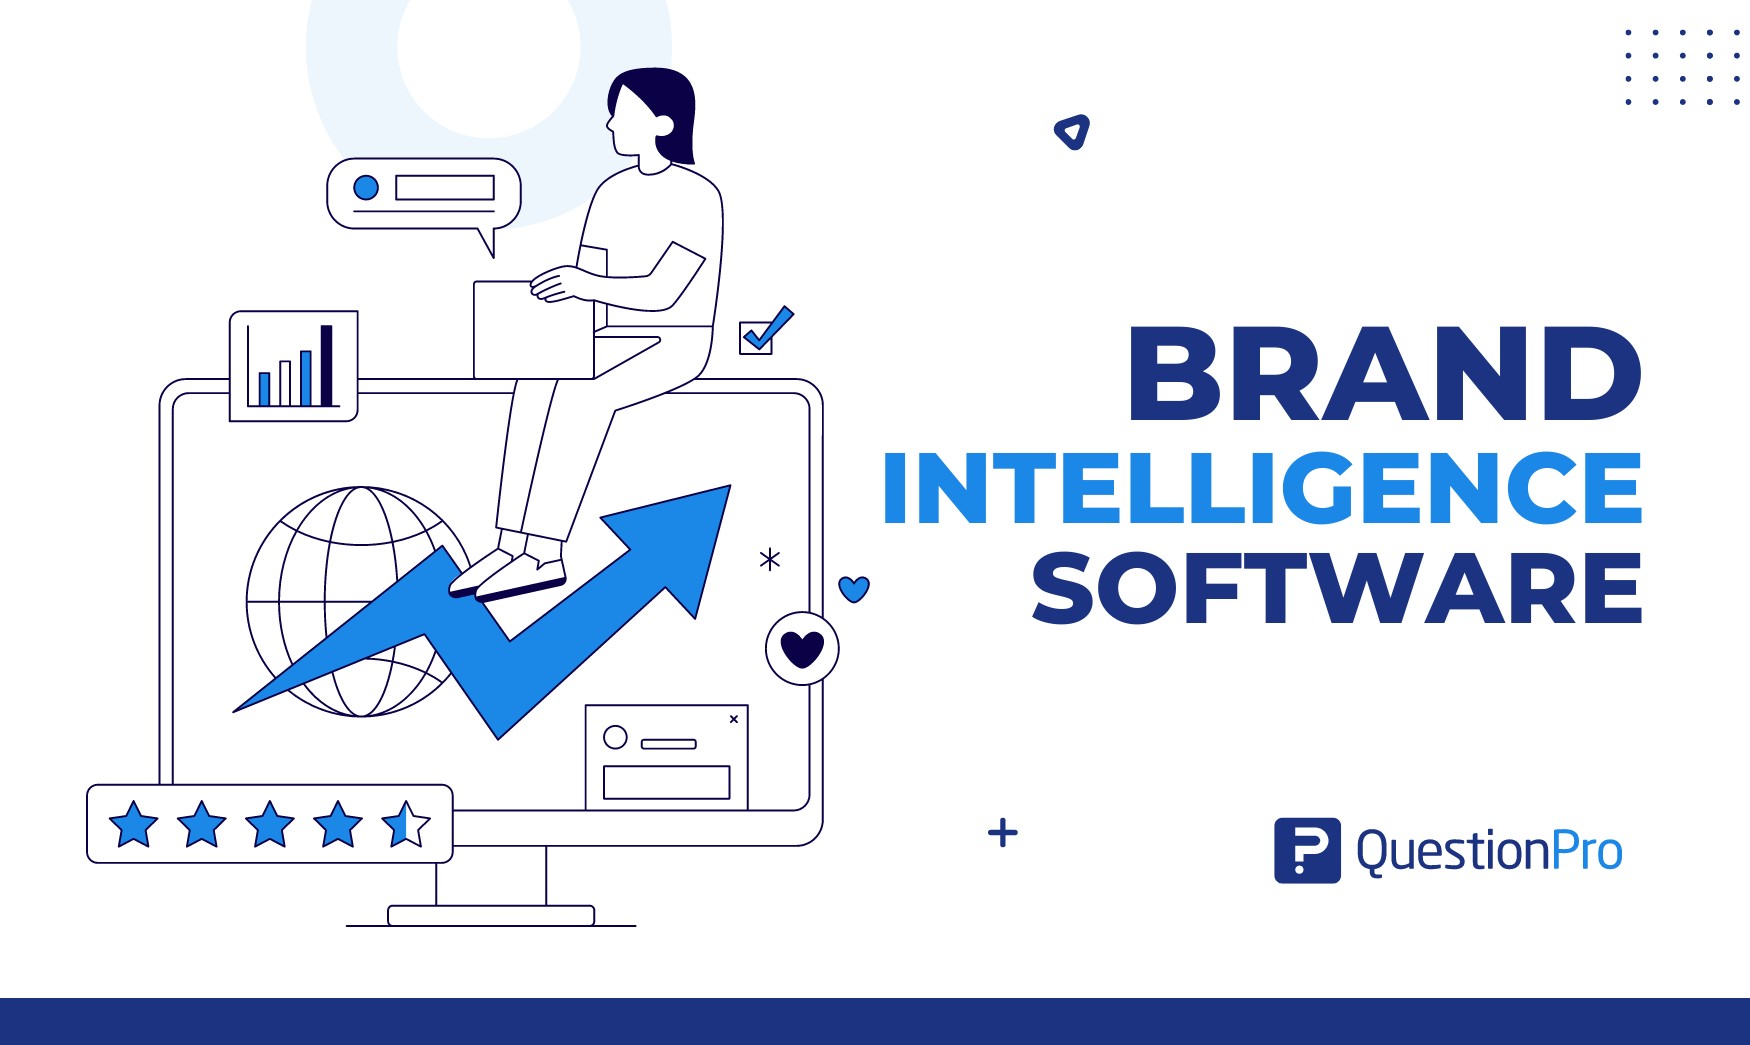 Brand intelligence software